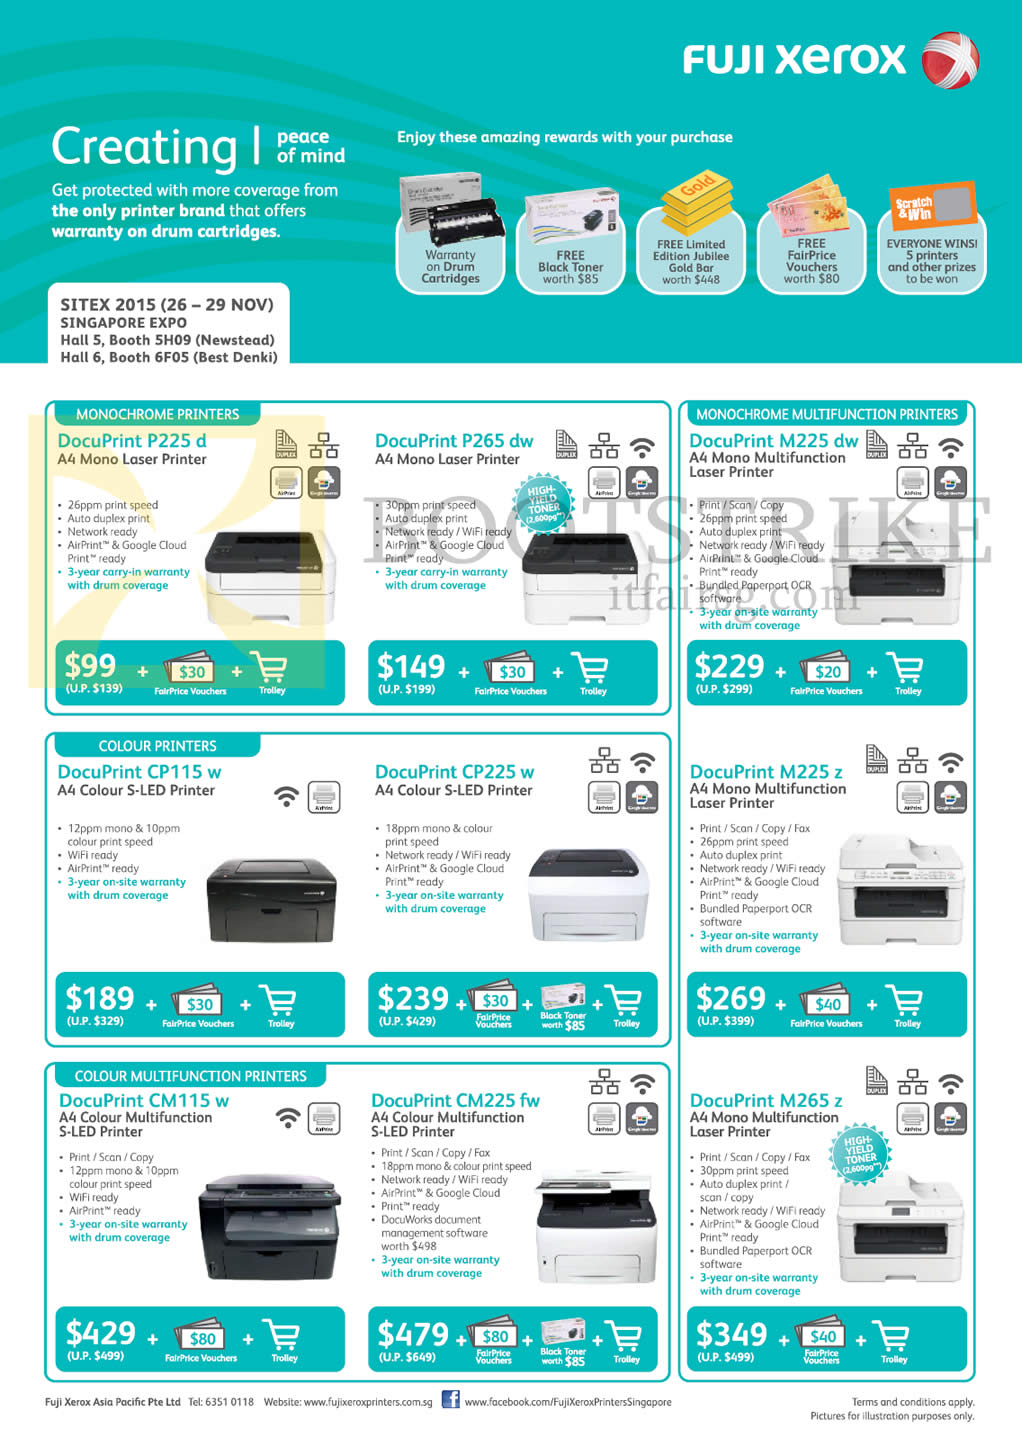 SITEX 2015 price list image brochure of Fuji Xerox Printers DocuPrint P225d, P265dw, M225dw, M225z, CP225w, CP115w, CM115W, CM225fw, M265z